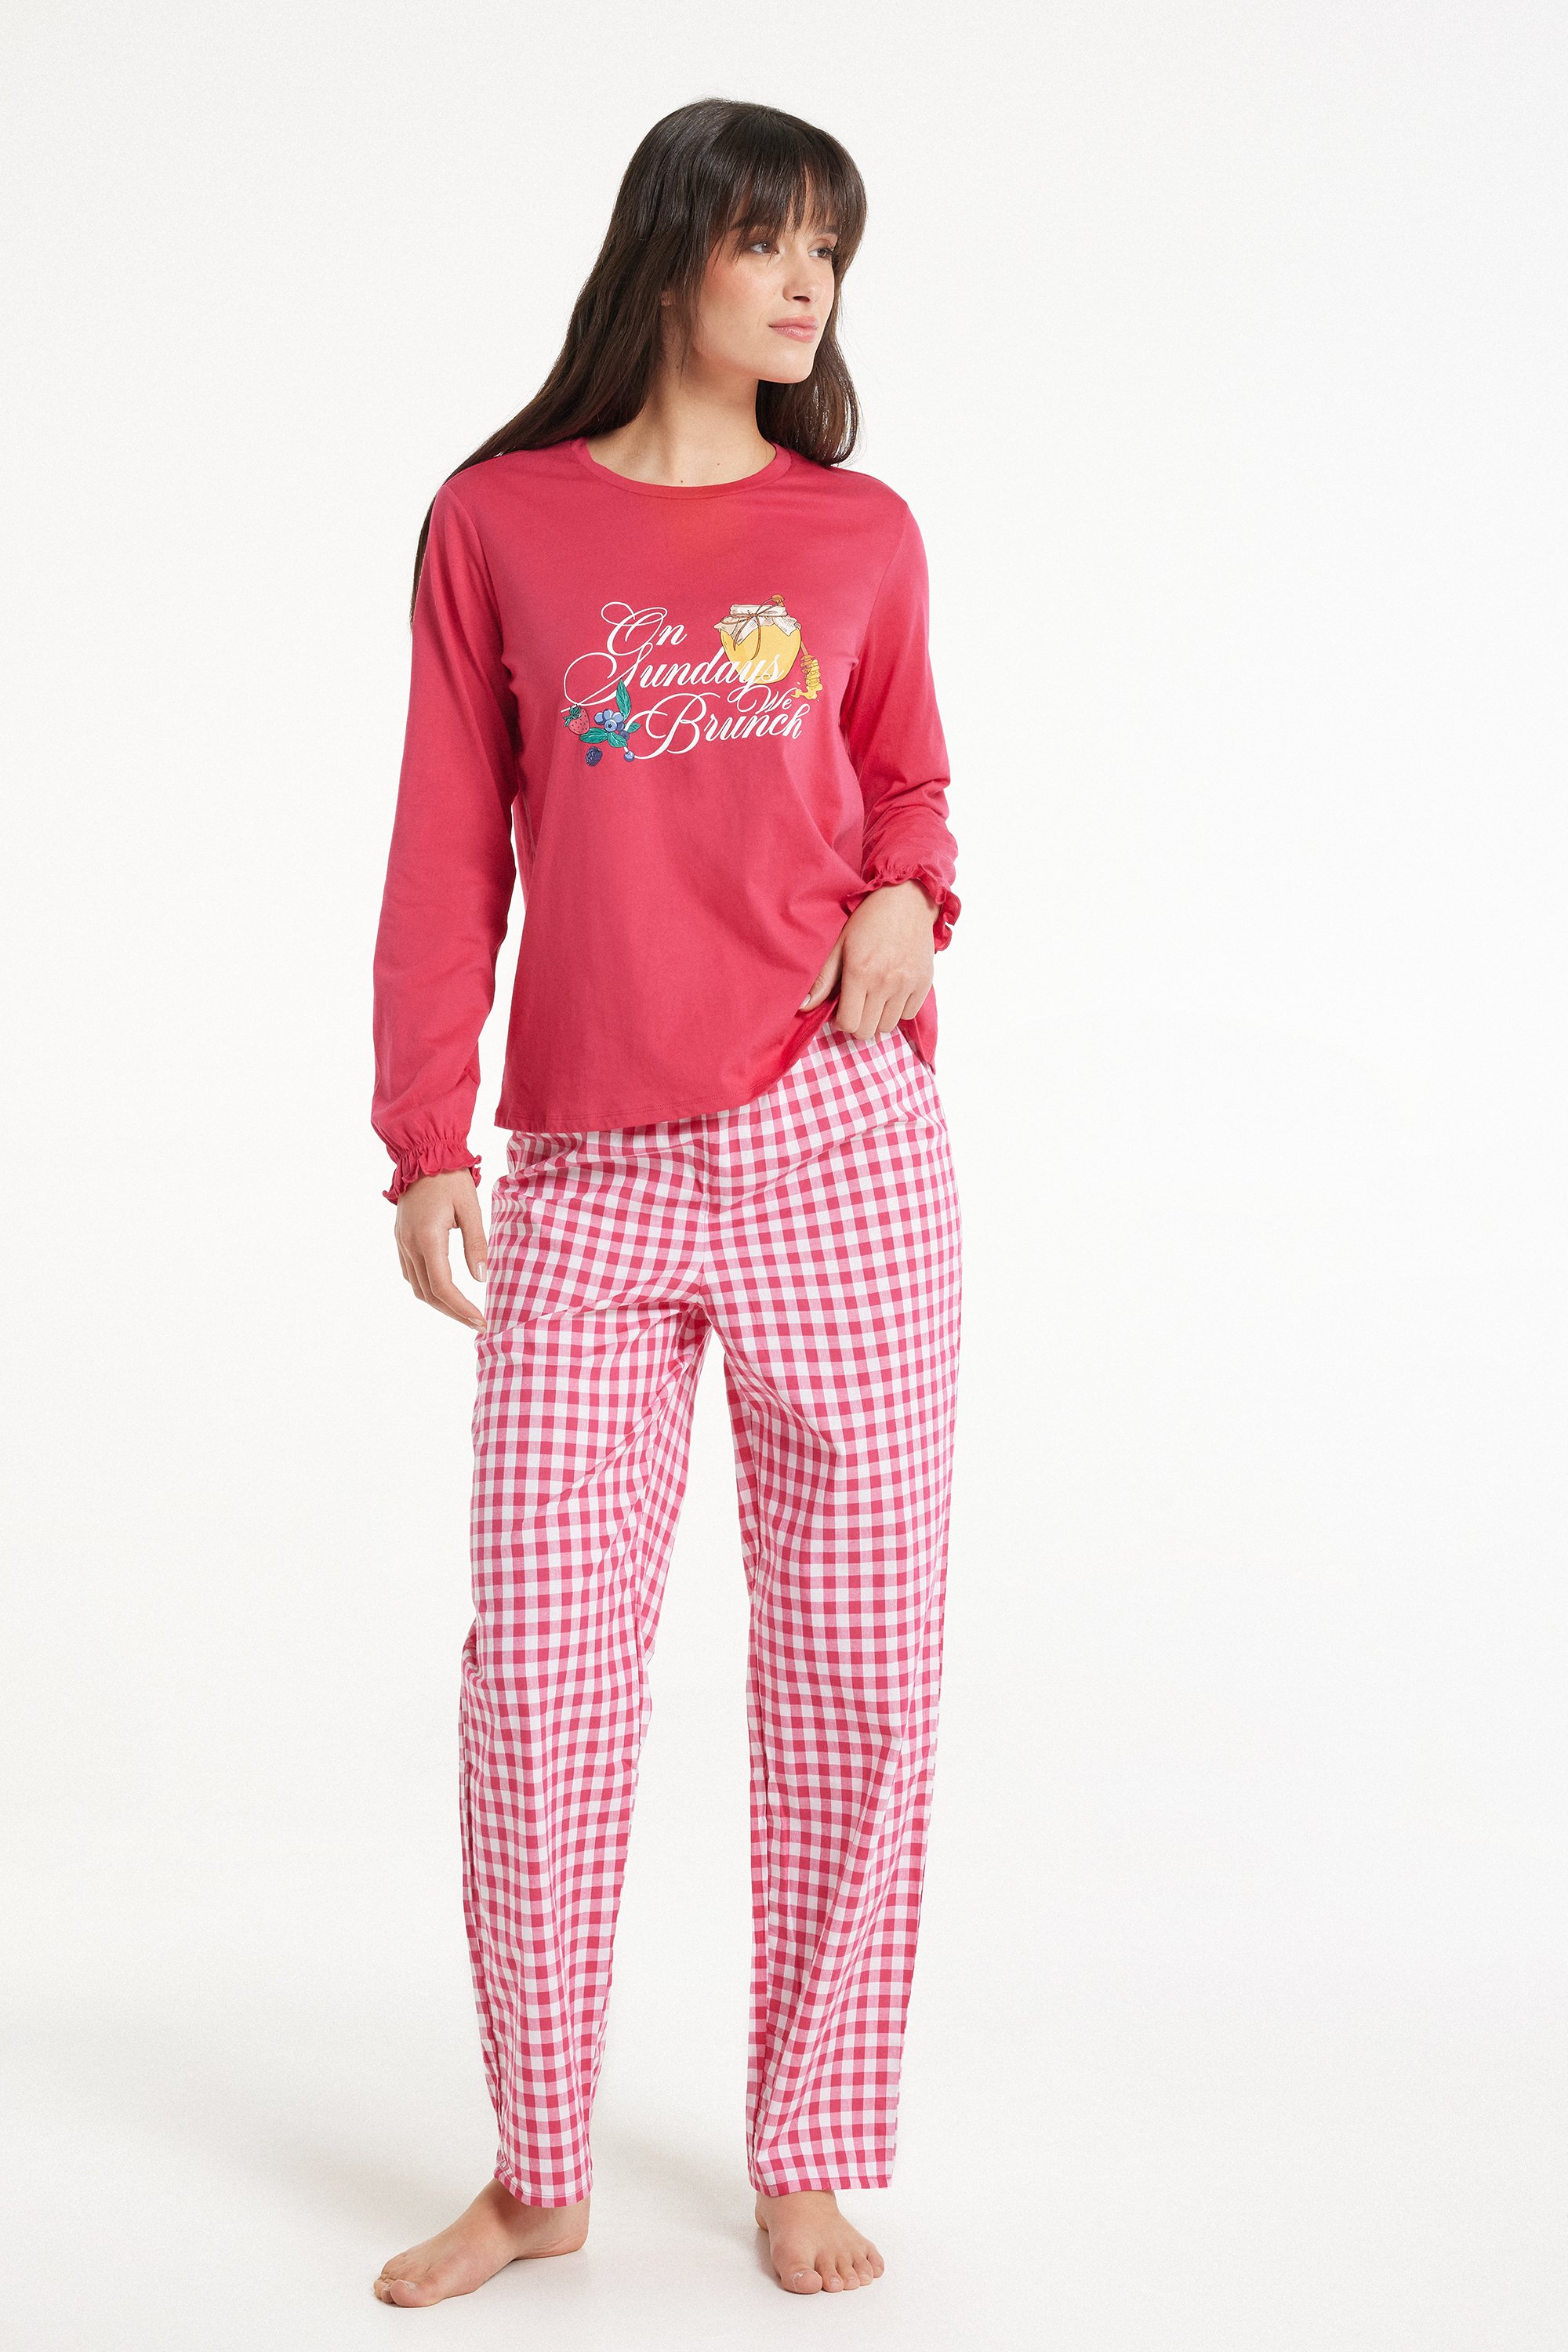 Full-Length Brunch-Print Cotton Pajamas